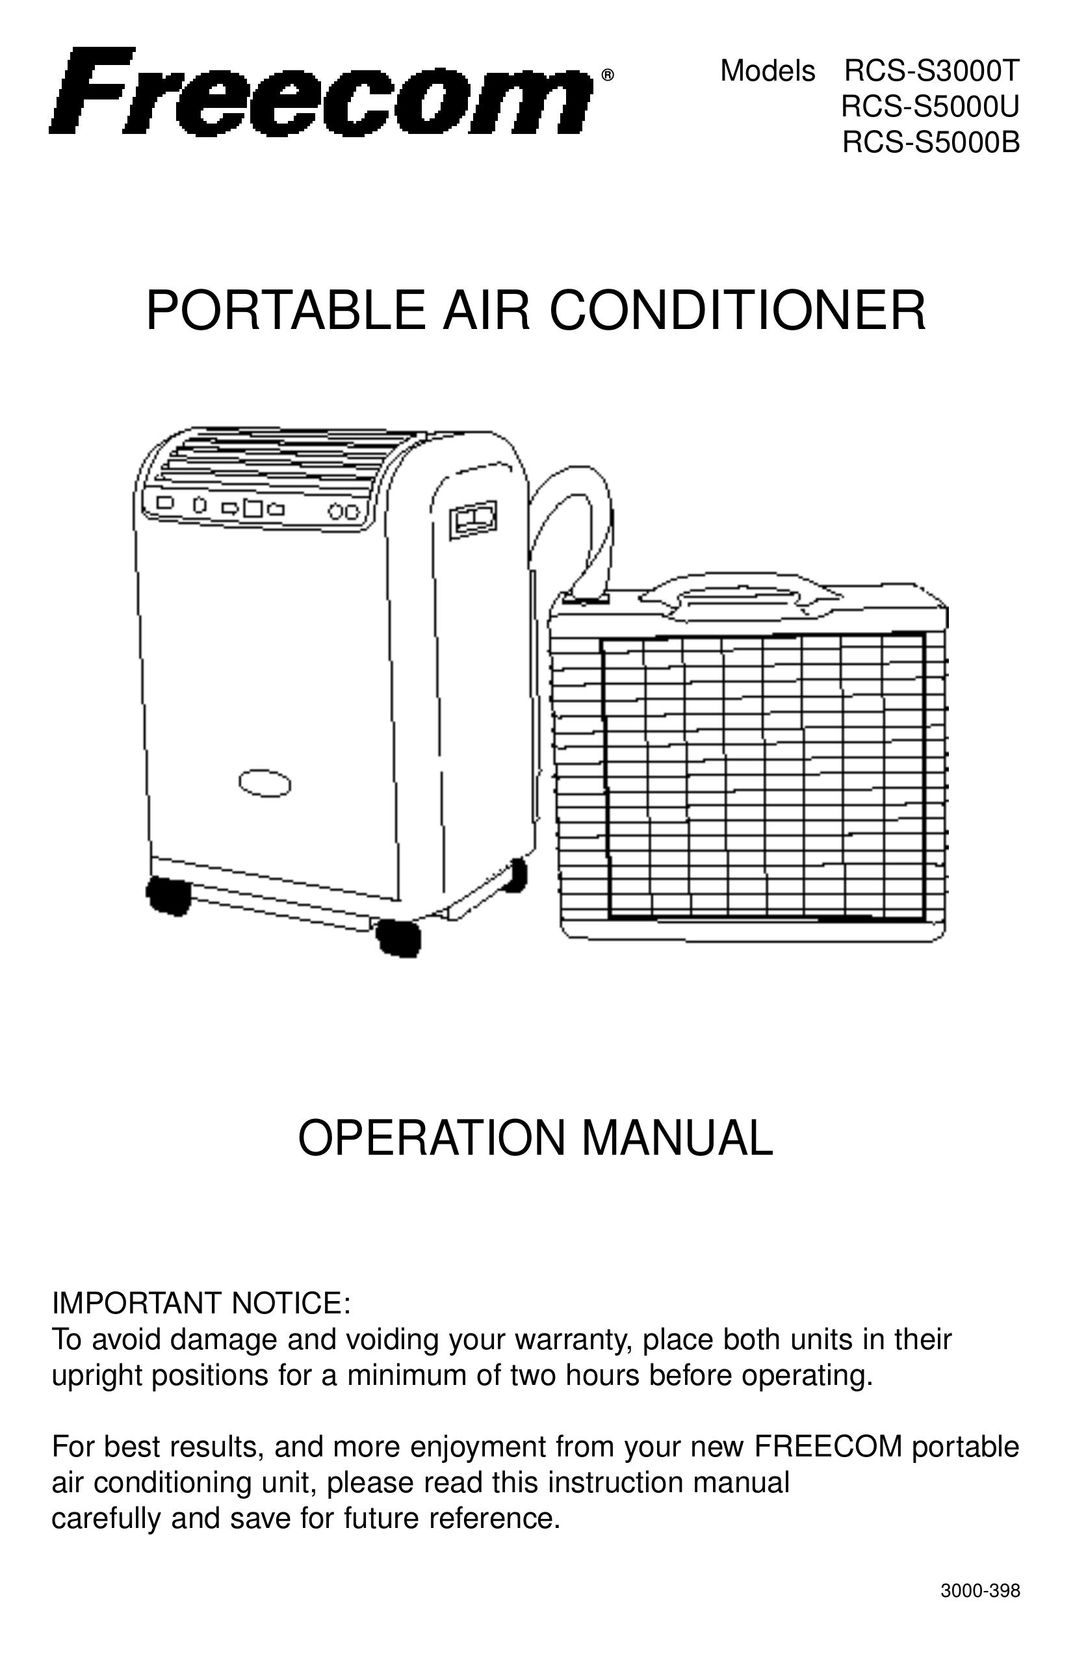 Freecom Technologies RCS-S5000B Air Conditioner User Manual